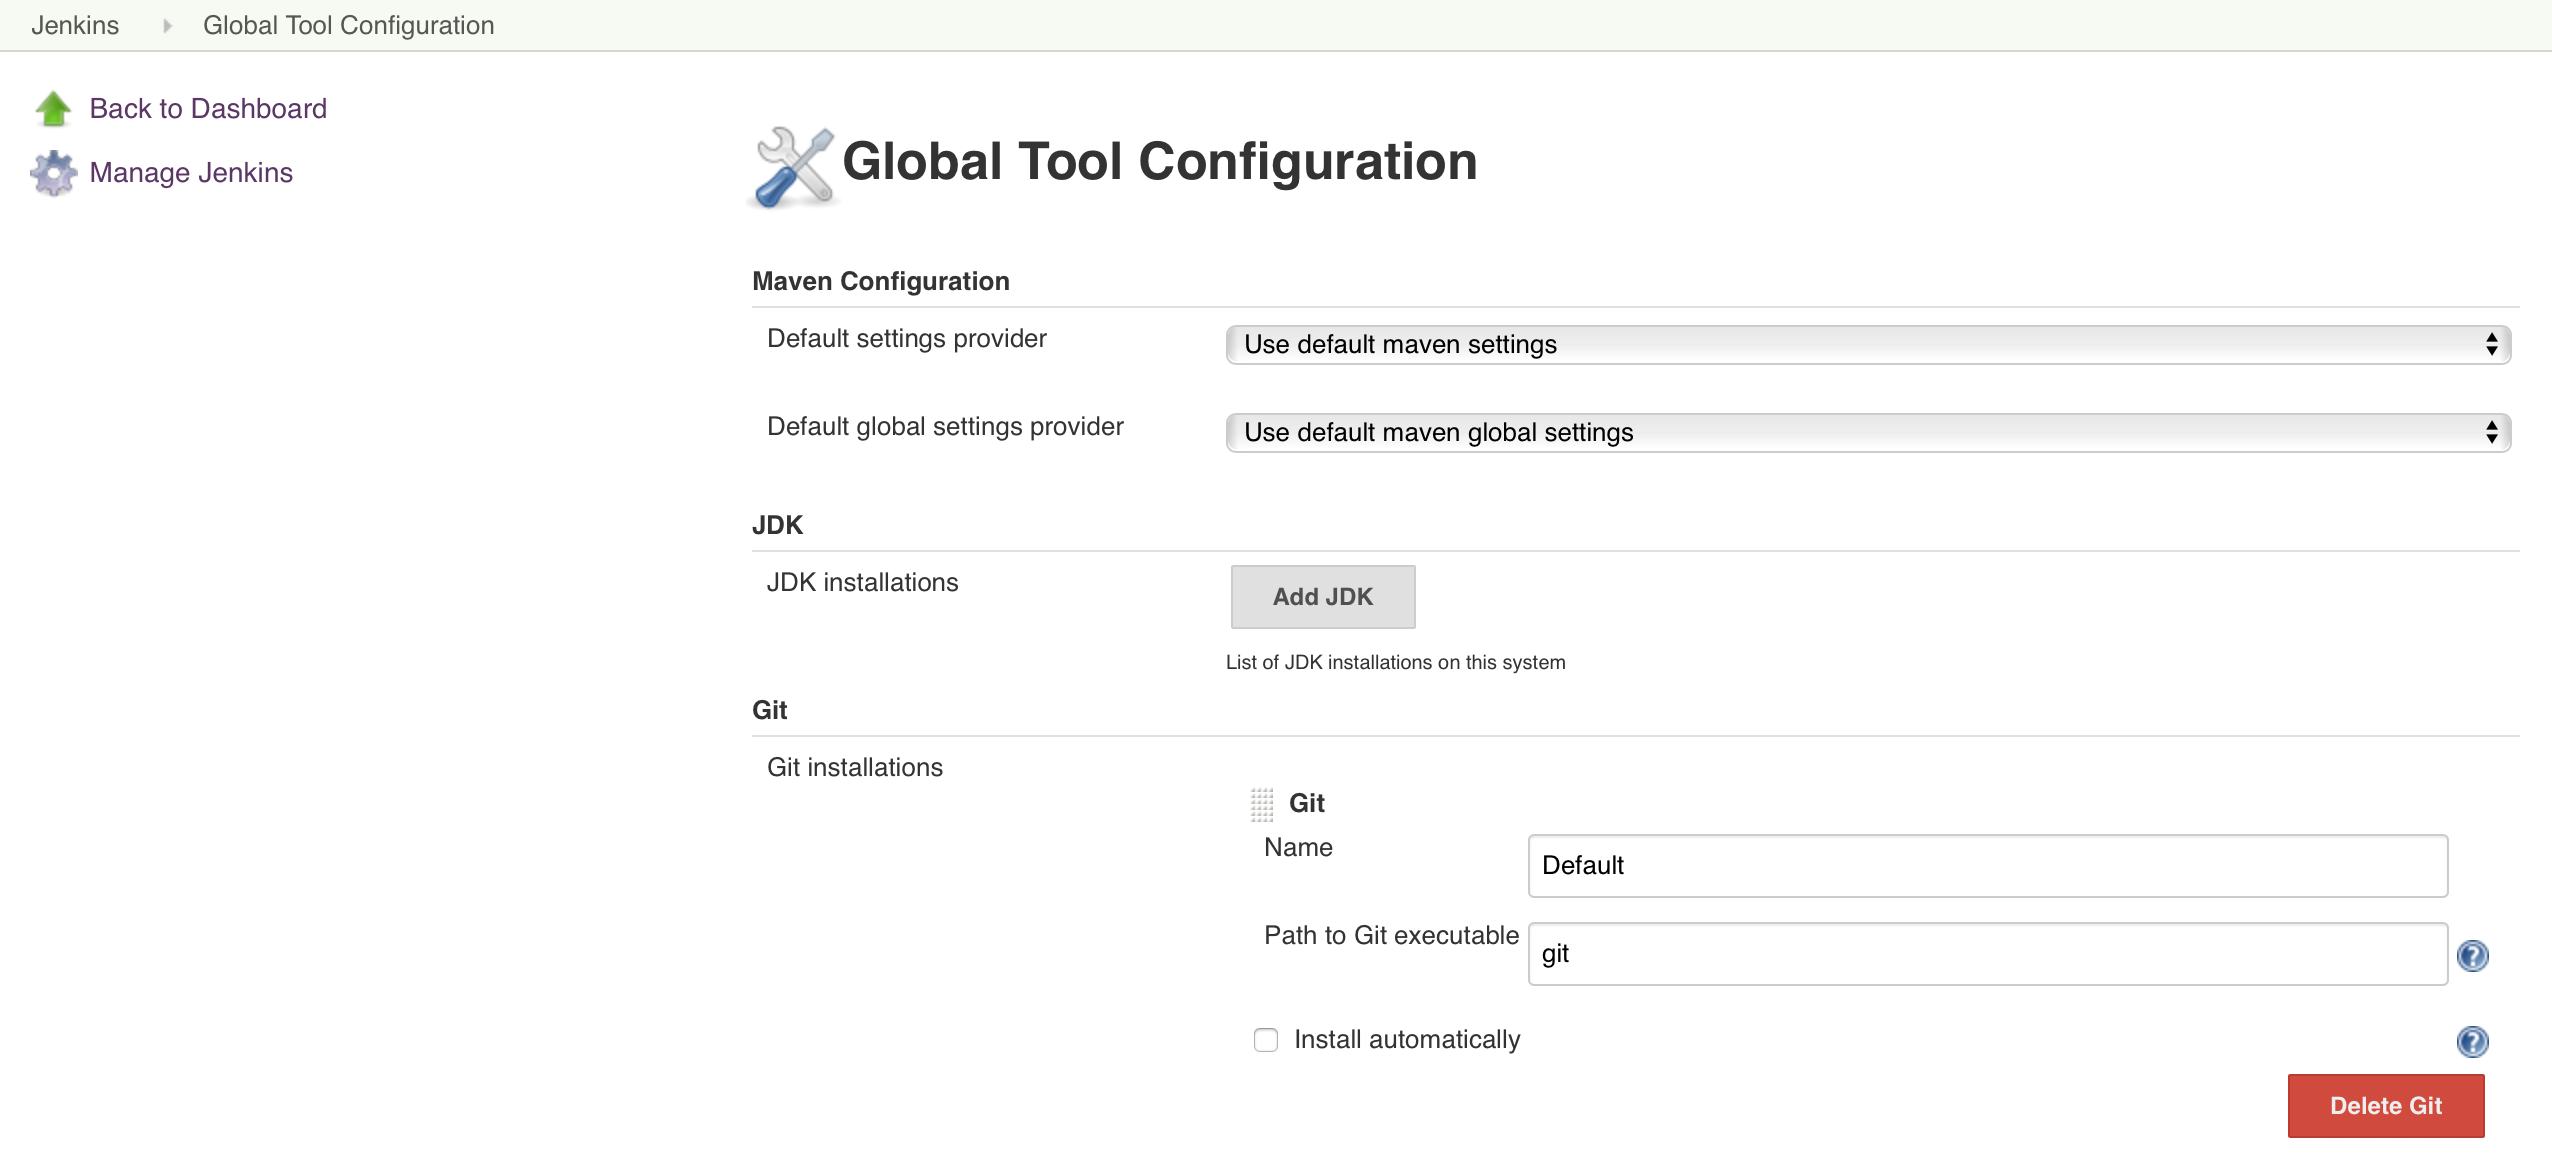 Manage Jenkins: Global Tool Configuration